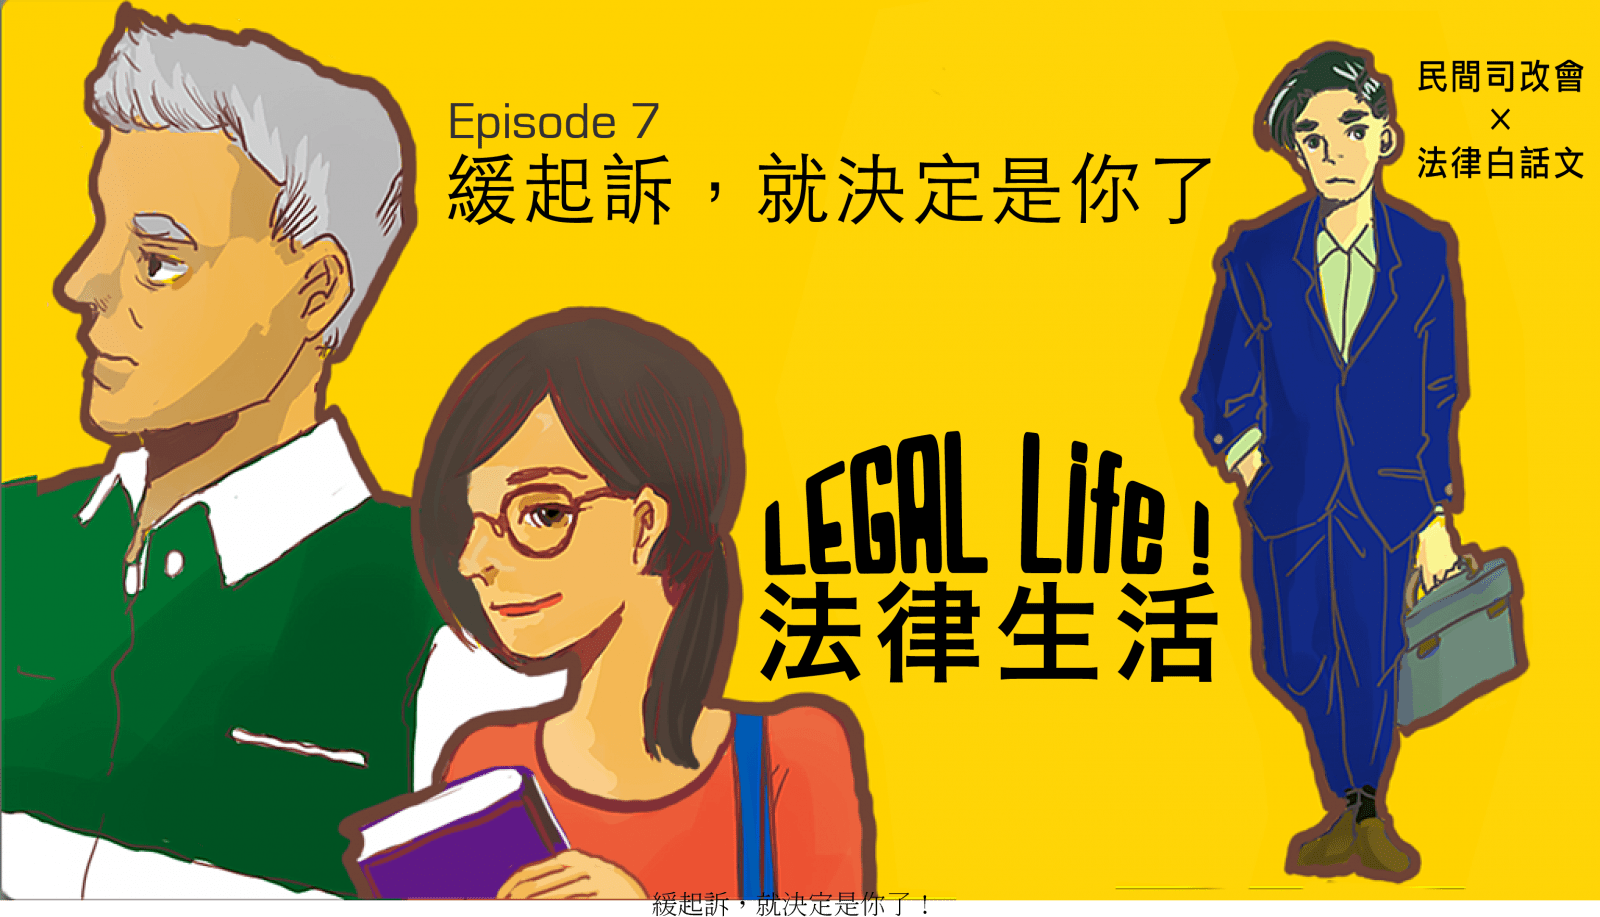 2016/07/legal-life-7-1.png